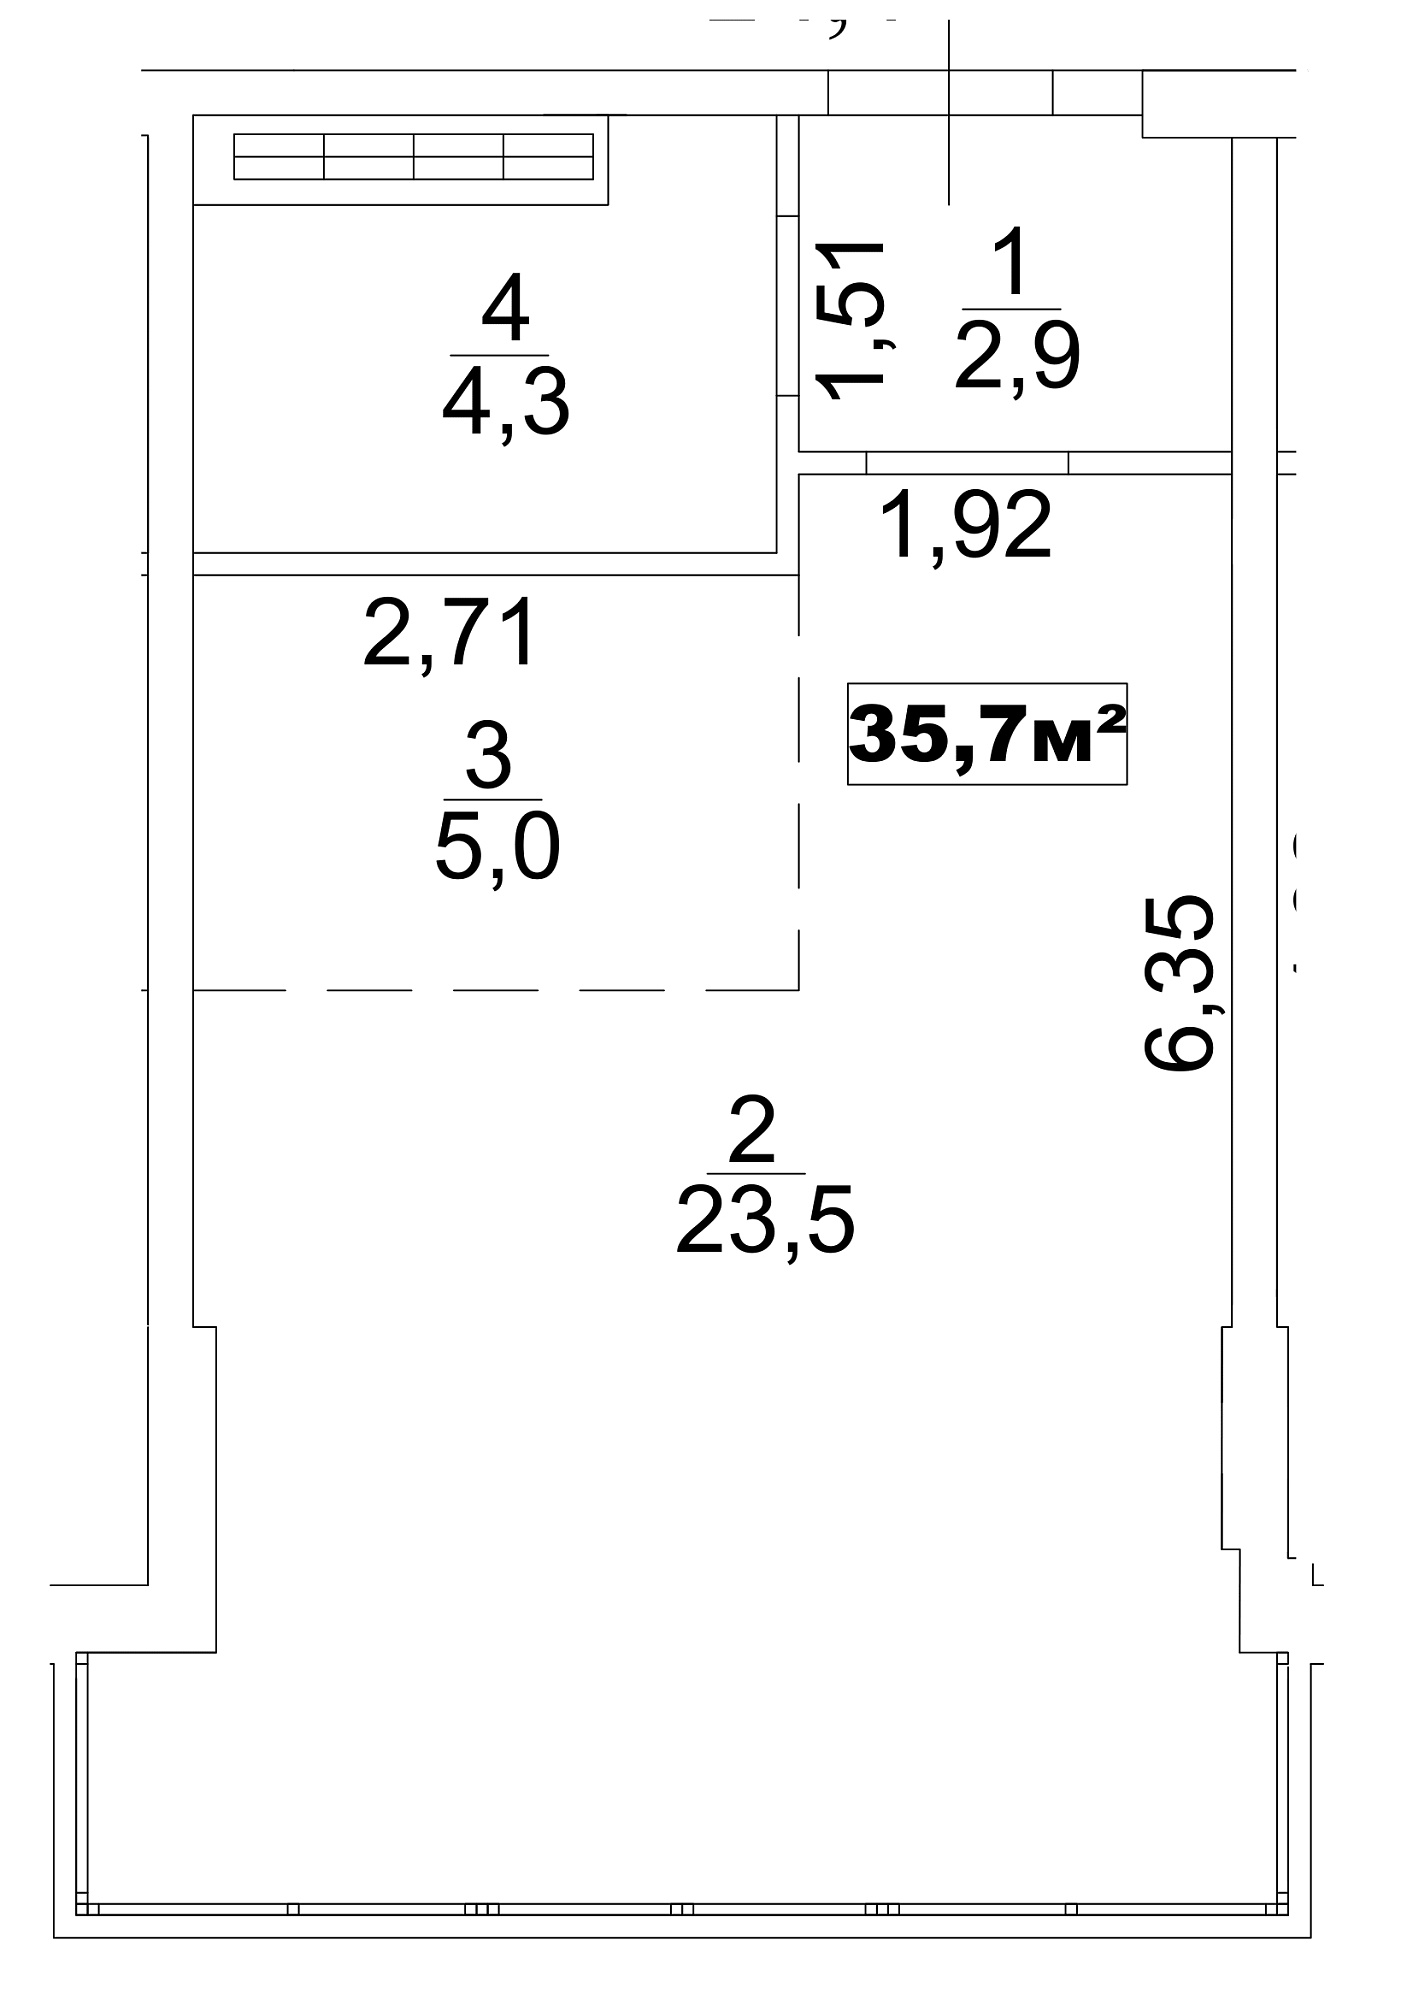 Planning Smart flats area 35.7m2, AB-13-06/0043б.